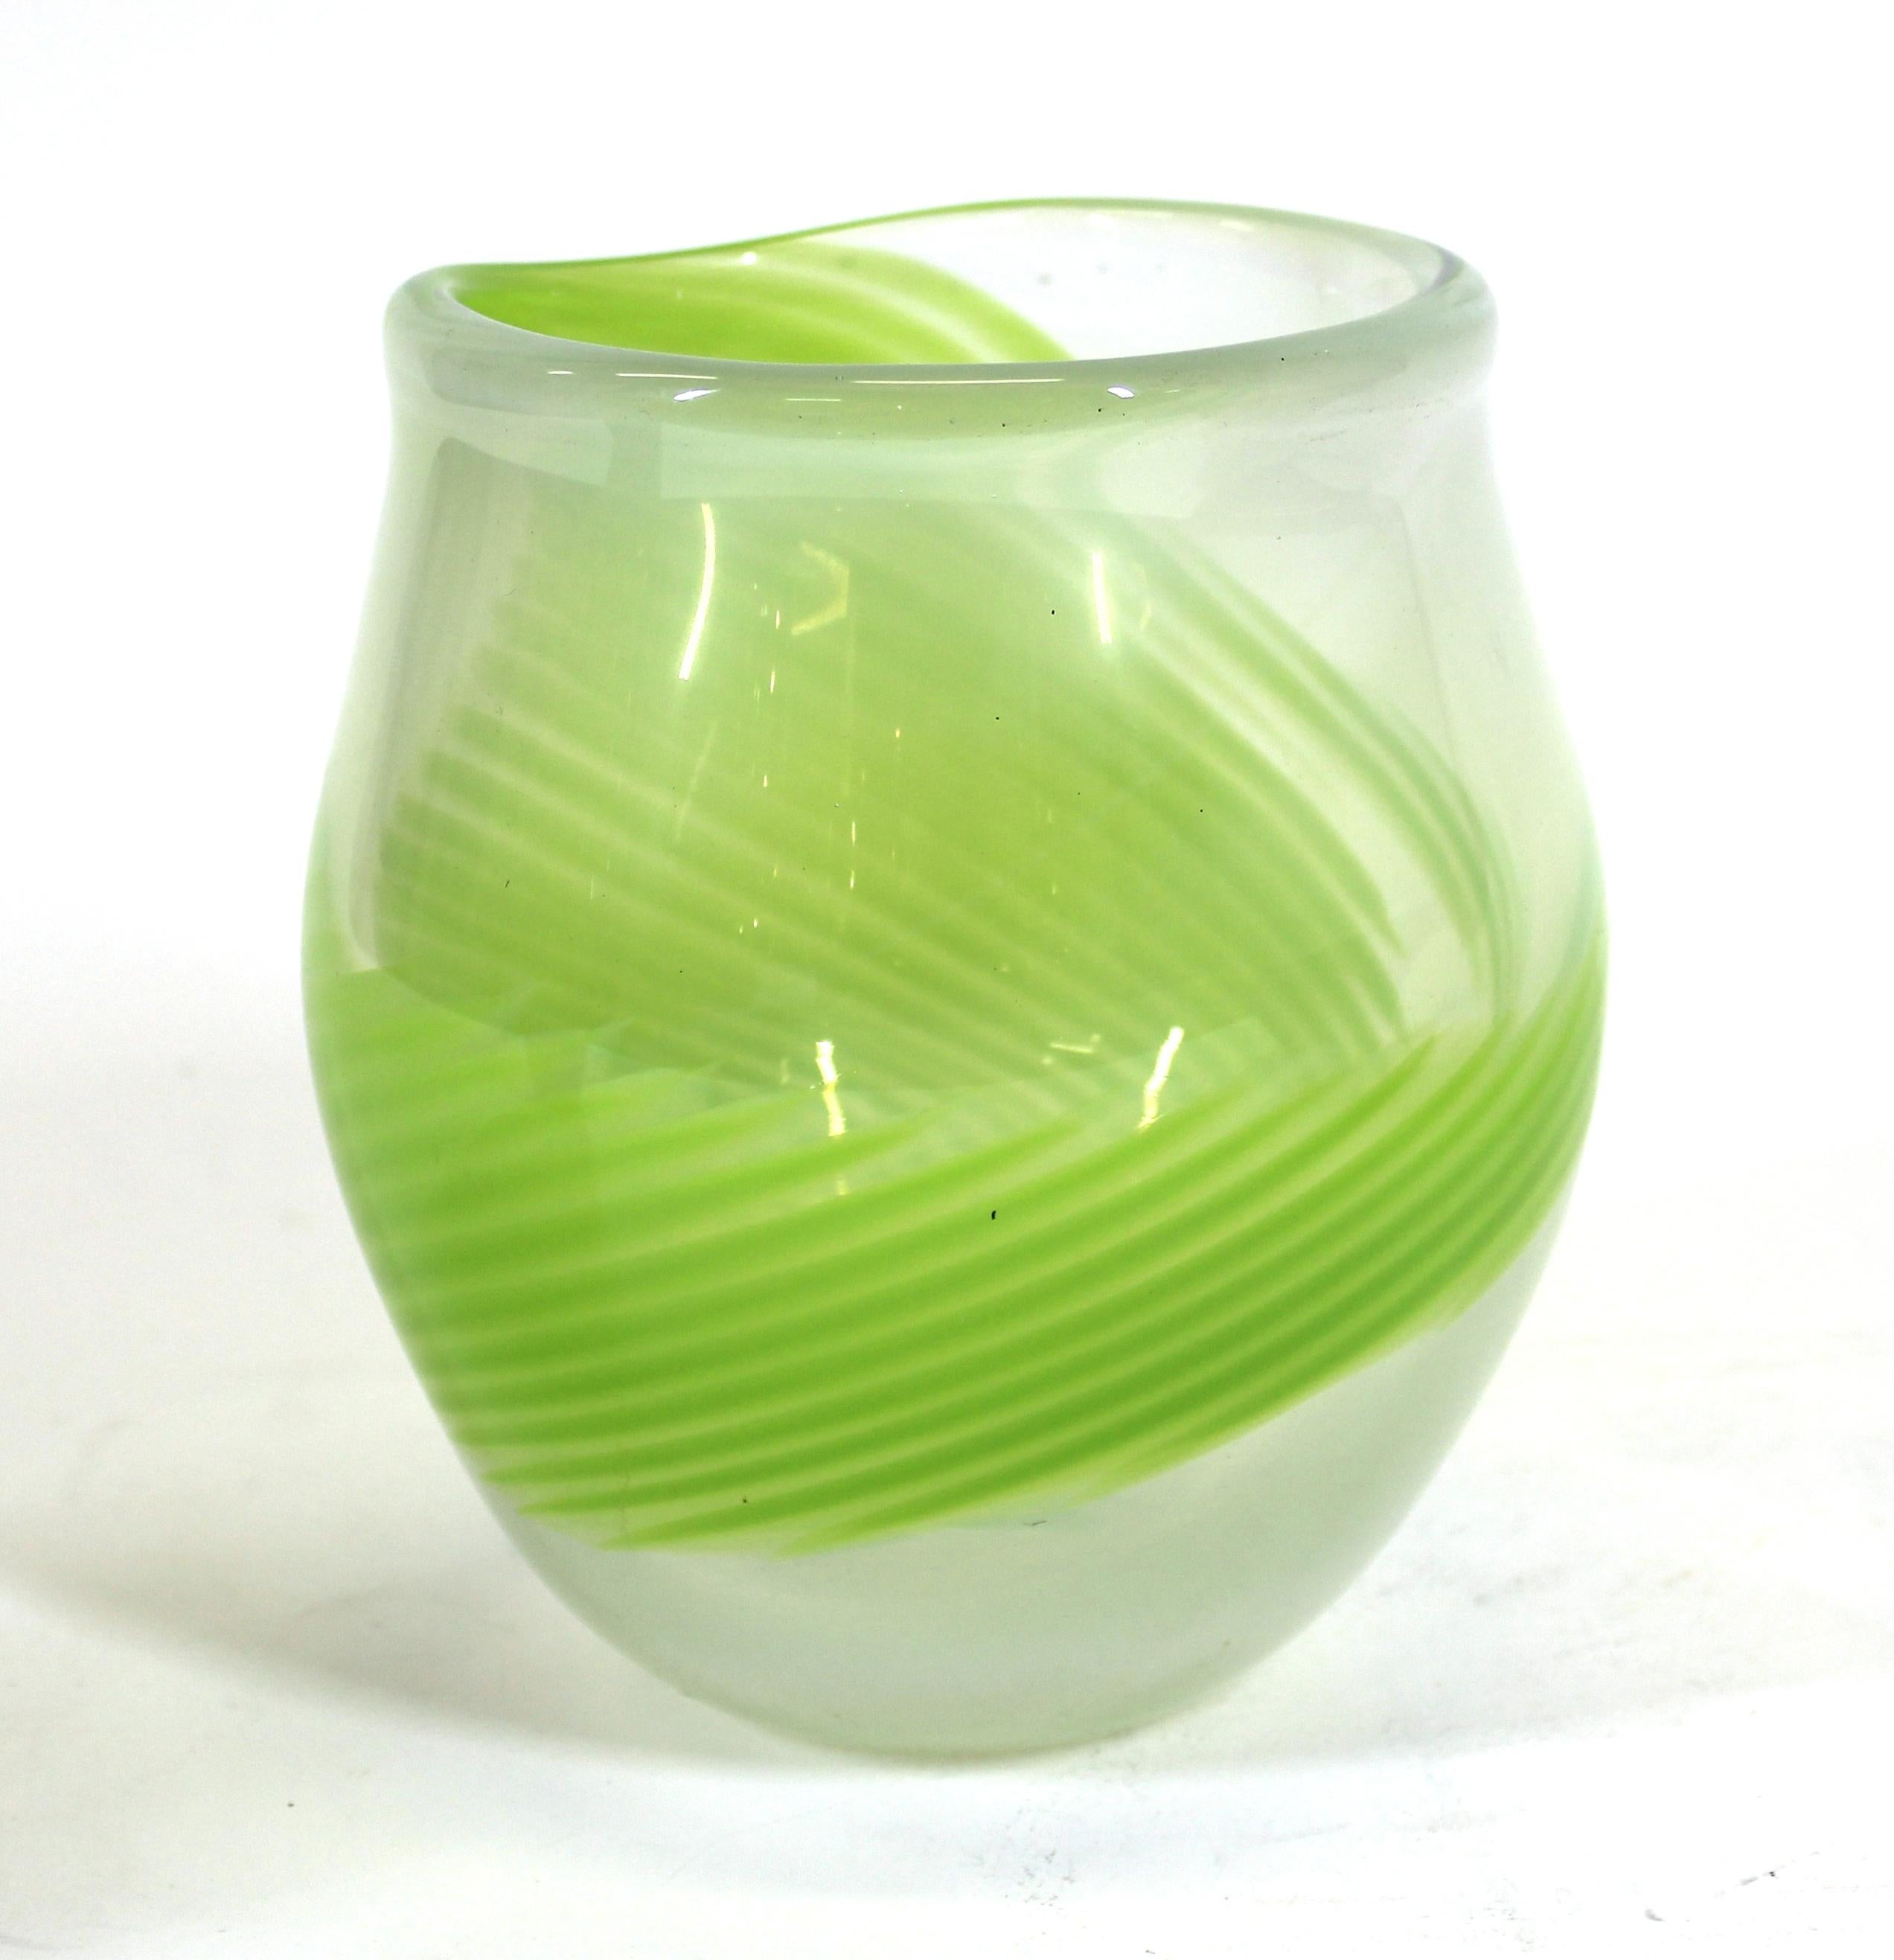 Kosta Boda modern glass vase with green swirl or strigiles motif, marked on the bottom.